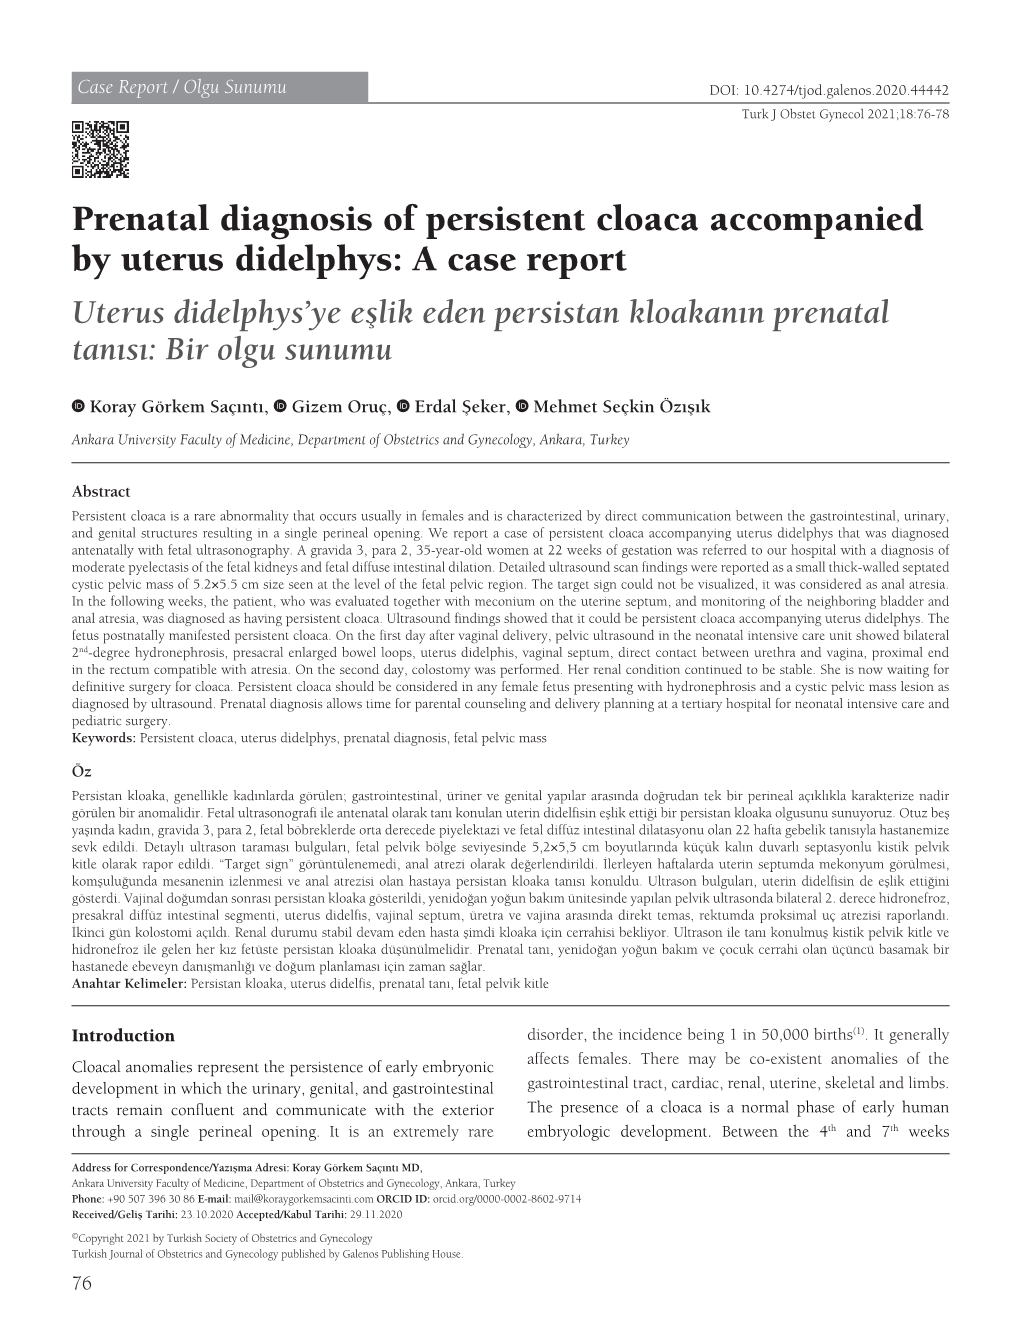 Prenatal Diagnosis of Persistent Cloaca Accompanied by Uterus